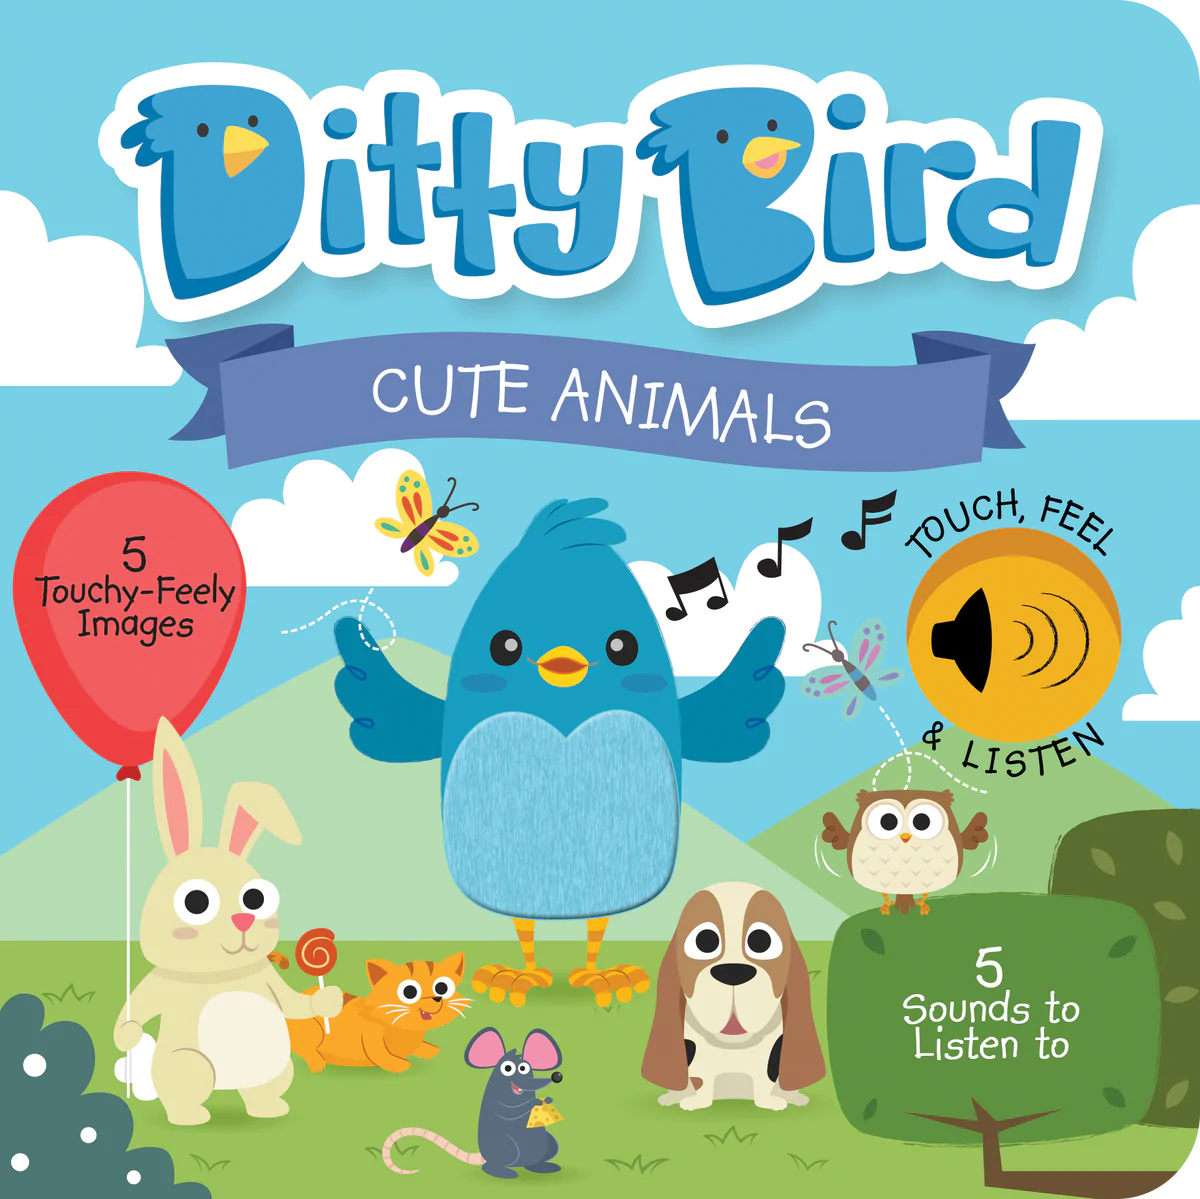 Ditty Bird- Cute Animals